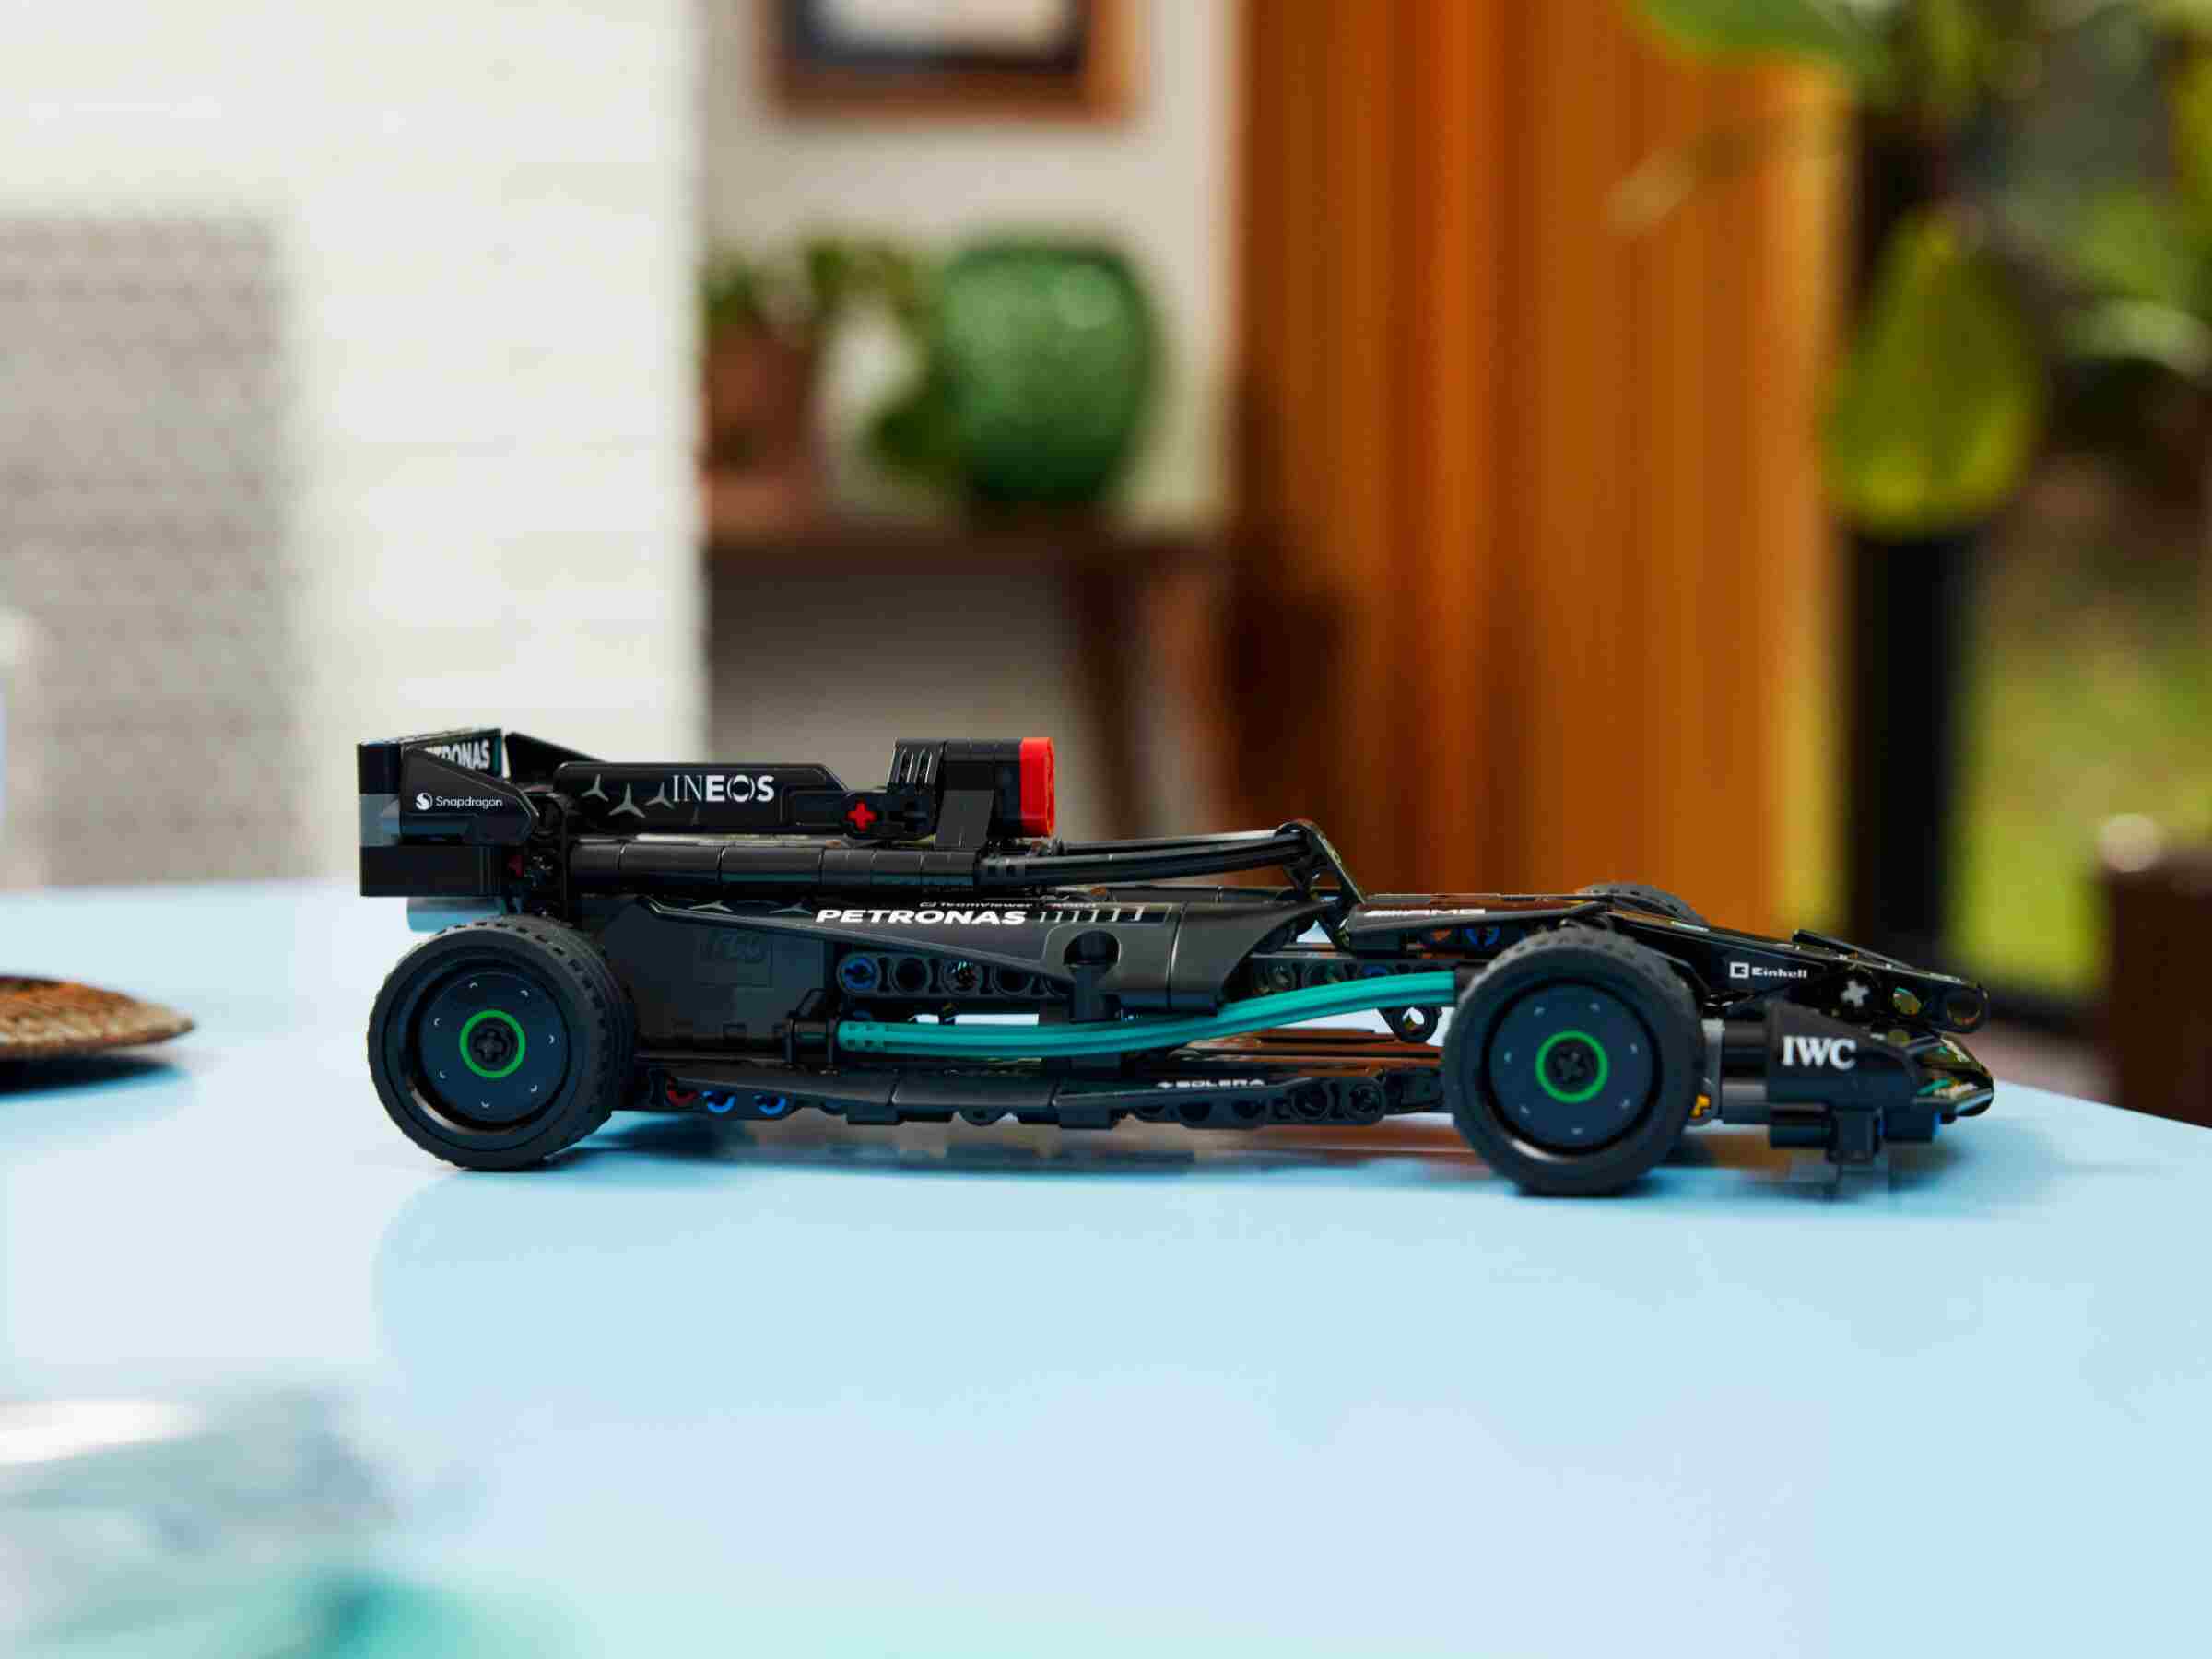 LEGO 42165 Technic Mercedes-AMG F1 W14 E Performance Pull-Back, Aufkleber